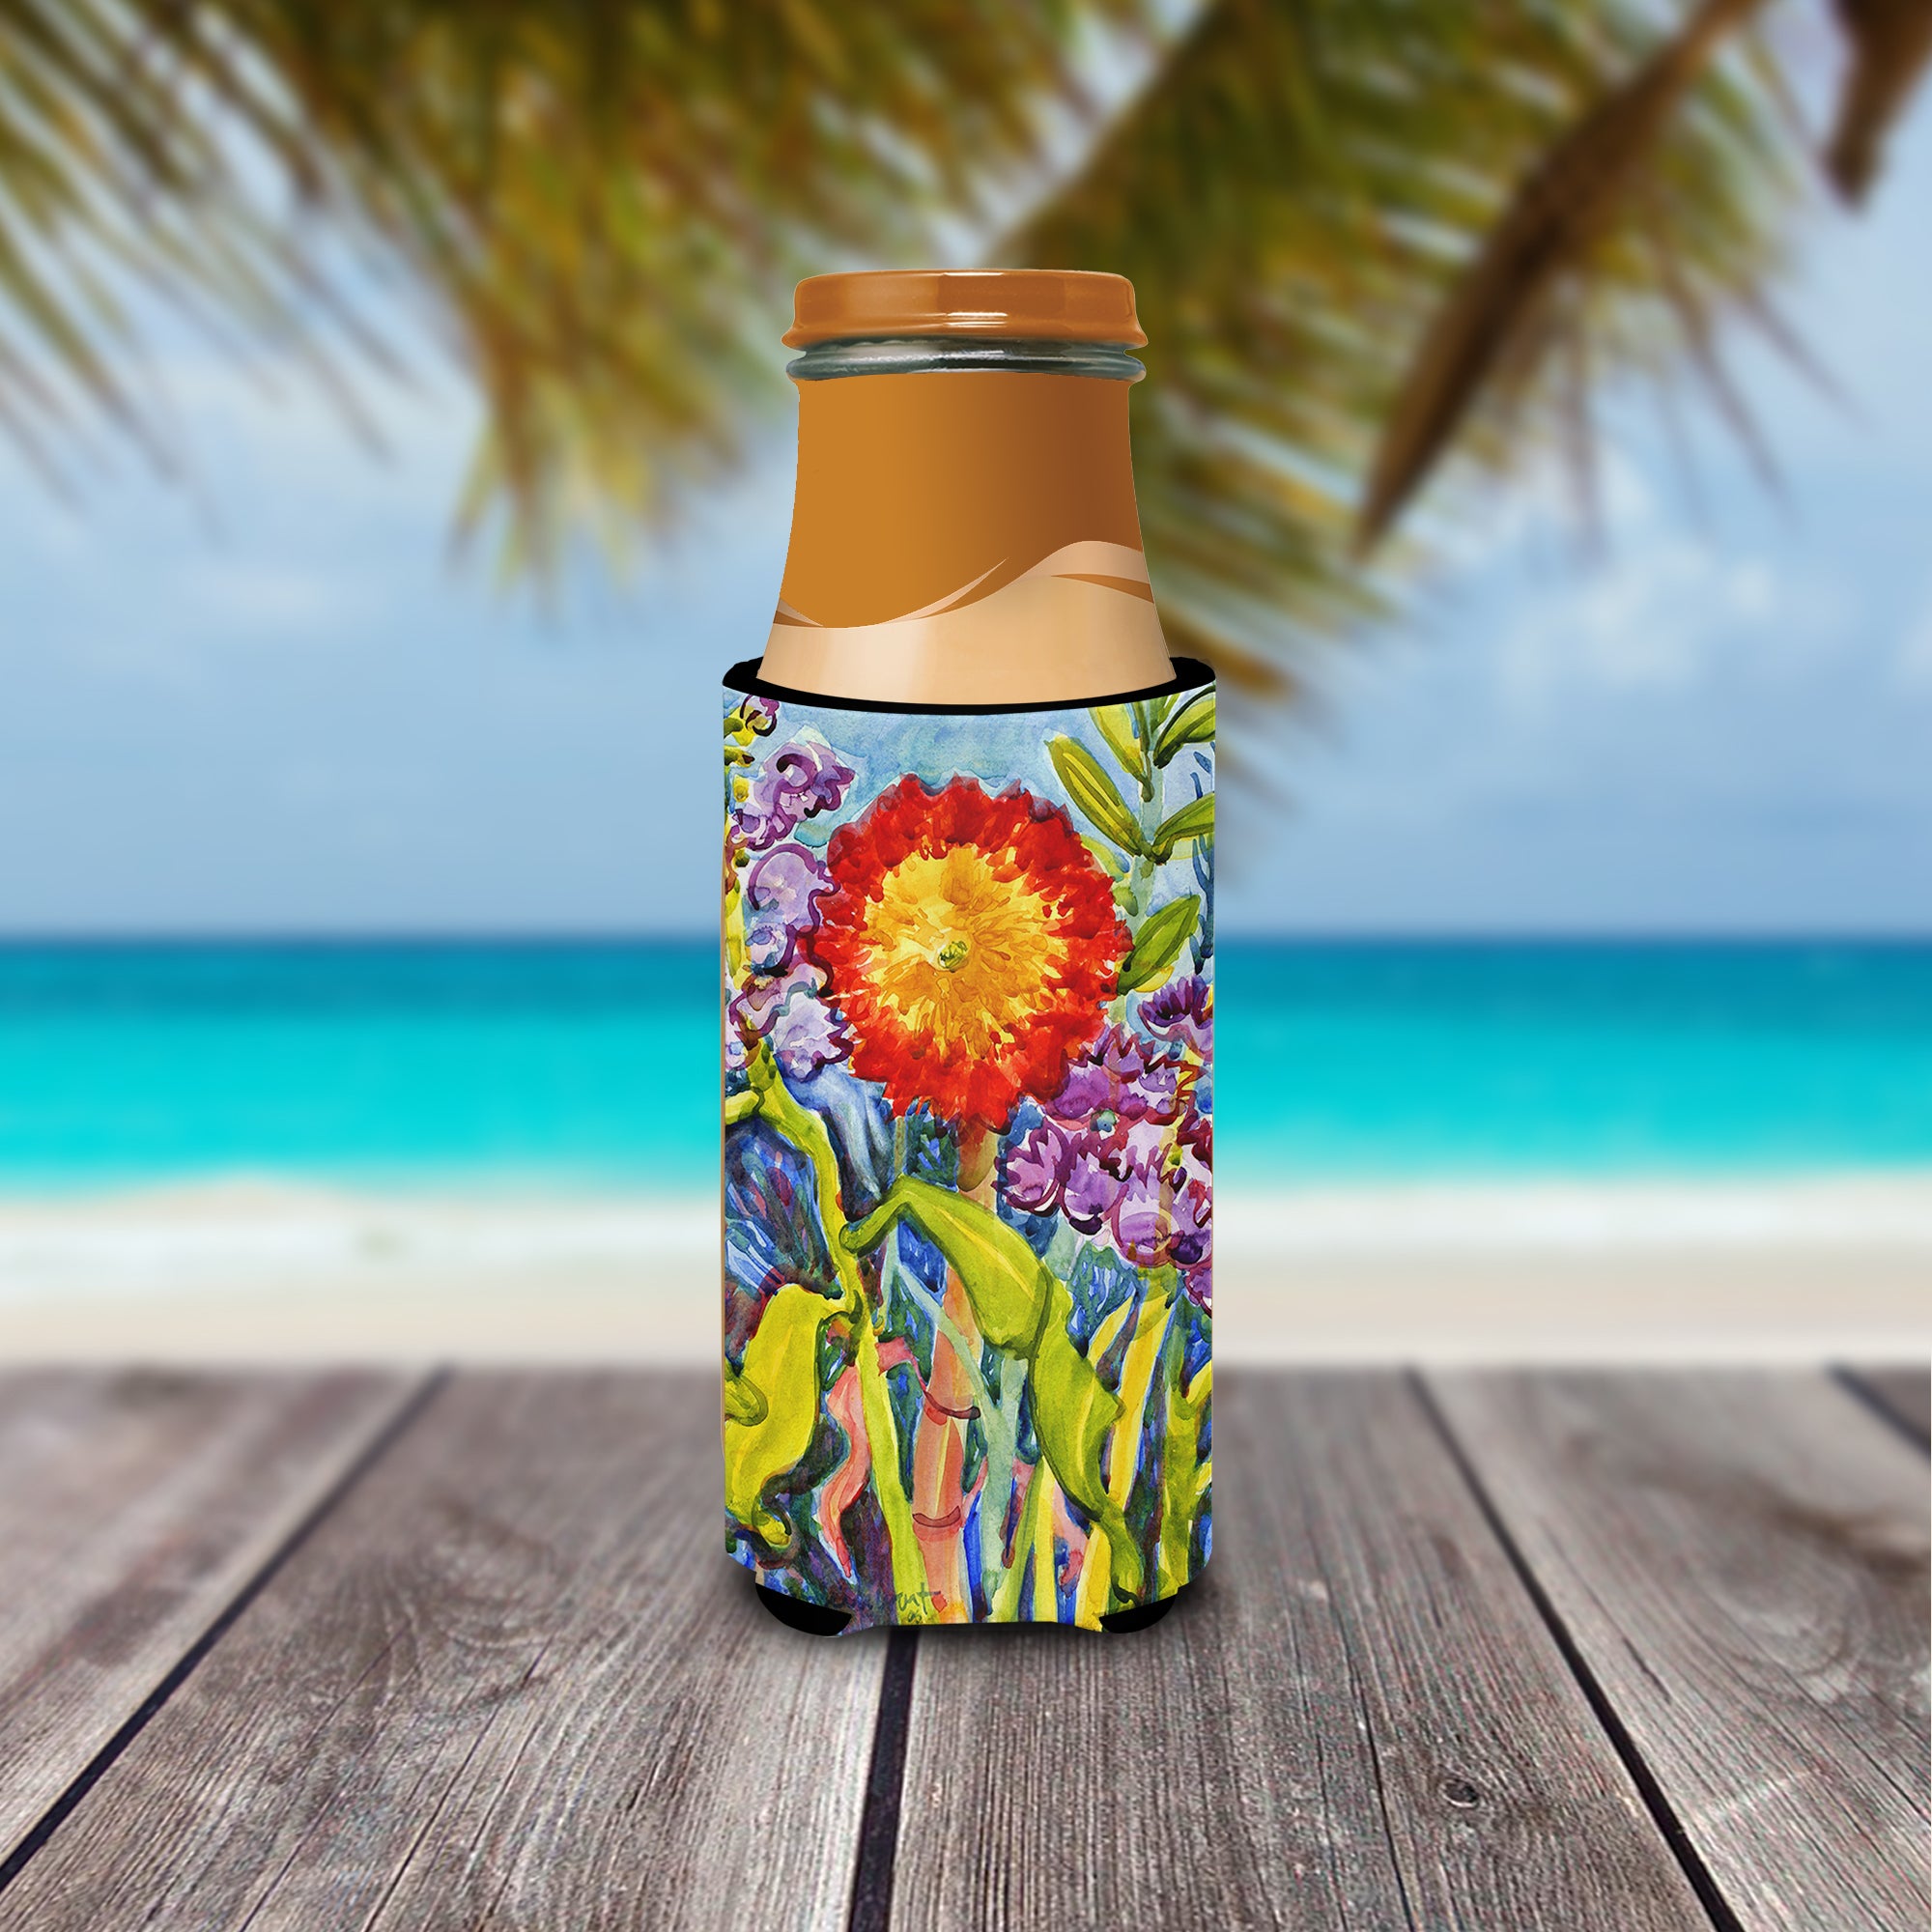 Flower - Sunflower Ultra Beverage Insulators for slim cans 6075MUK.